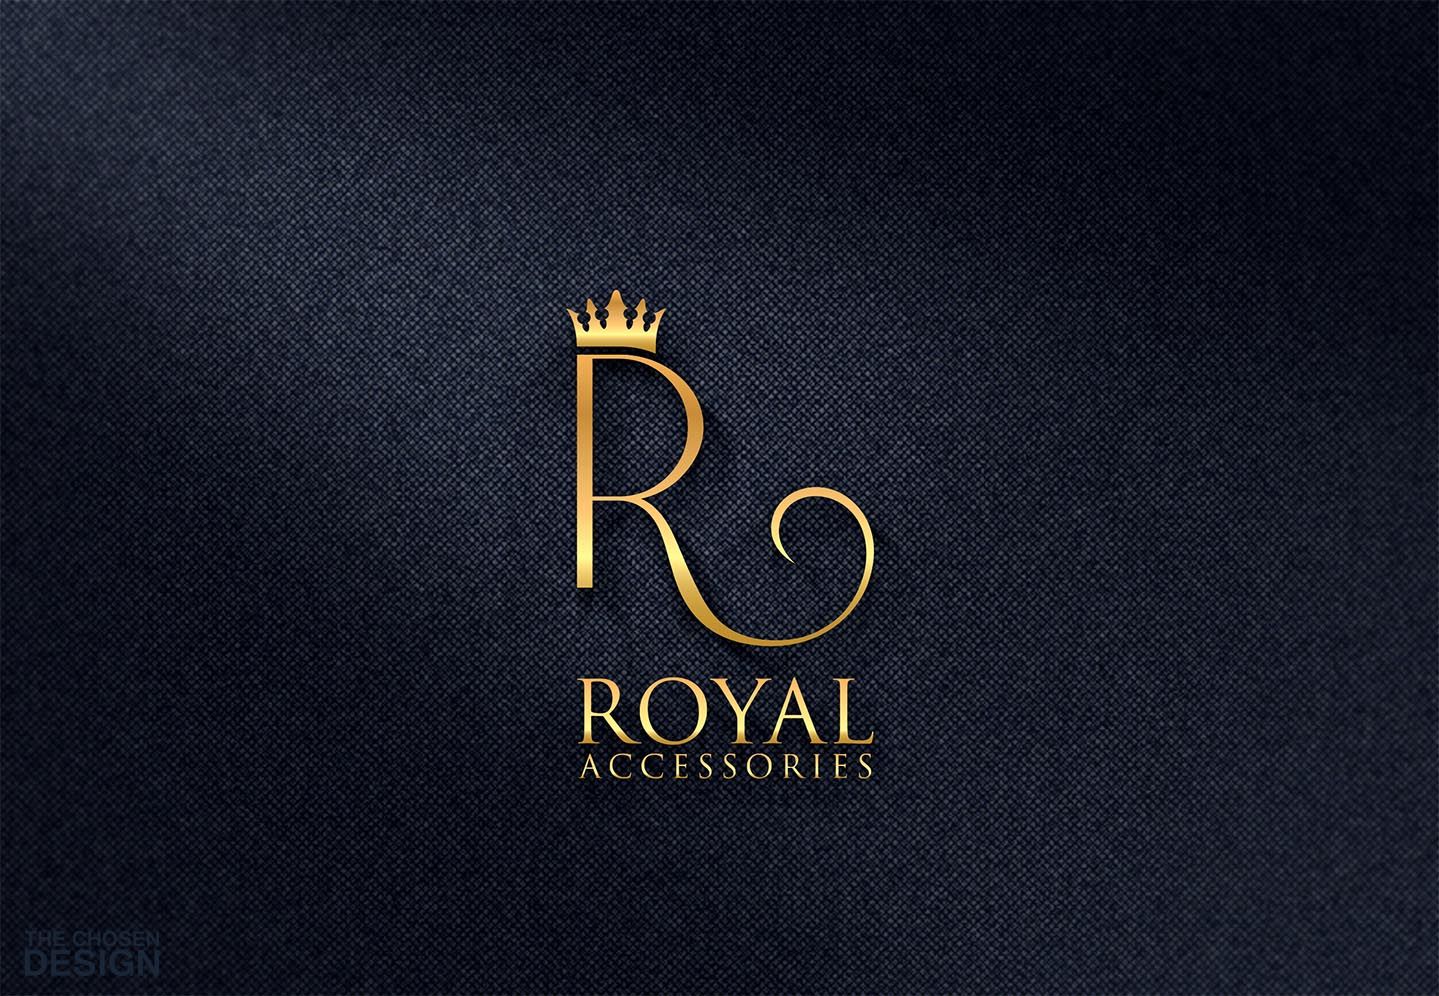 royal logo ideas 5